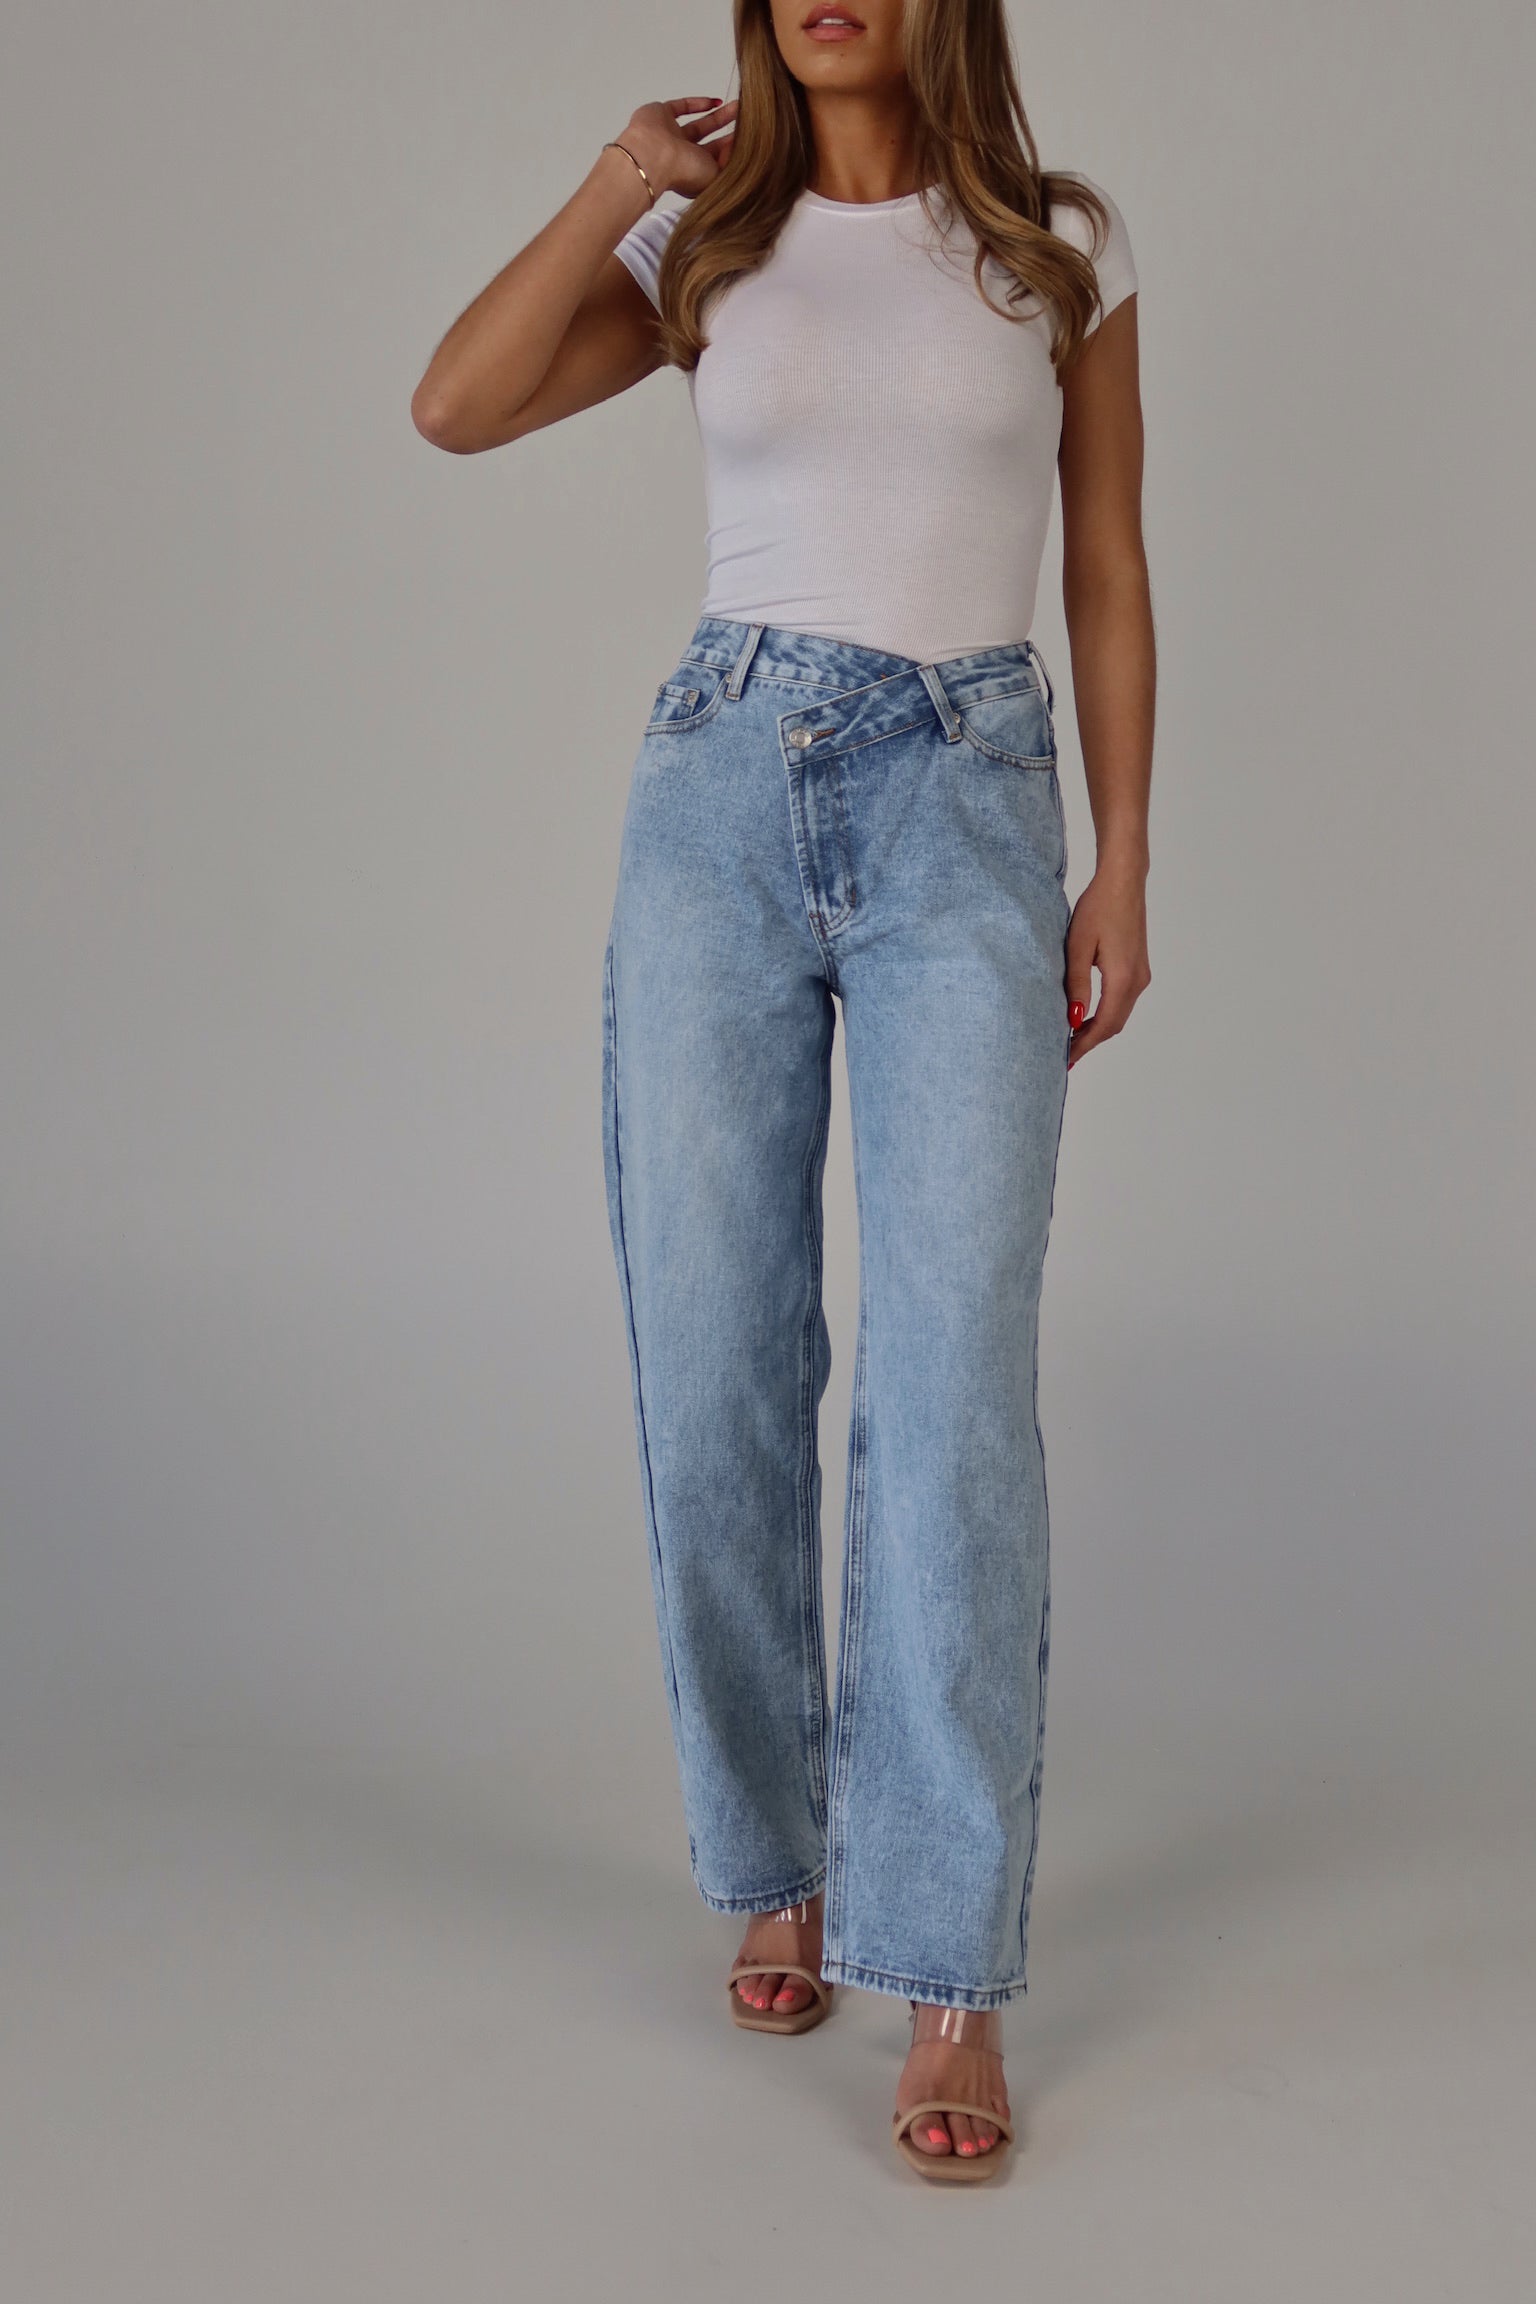 Jazlyn Crossover Denim Jeans